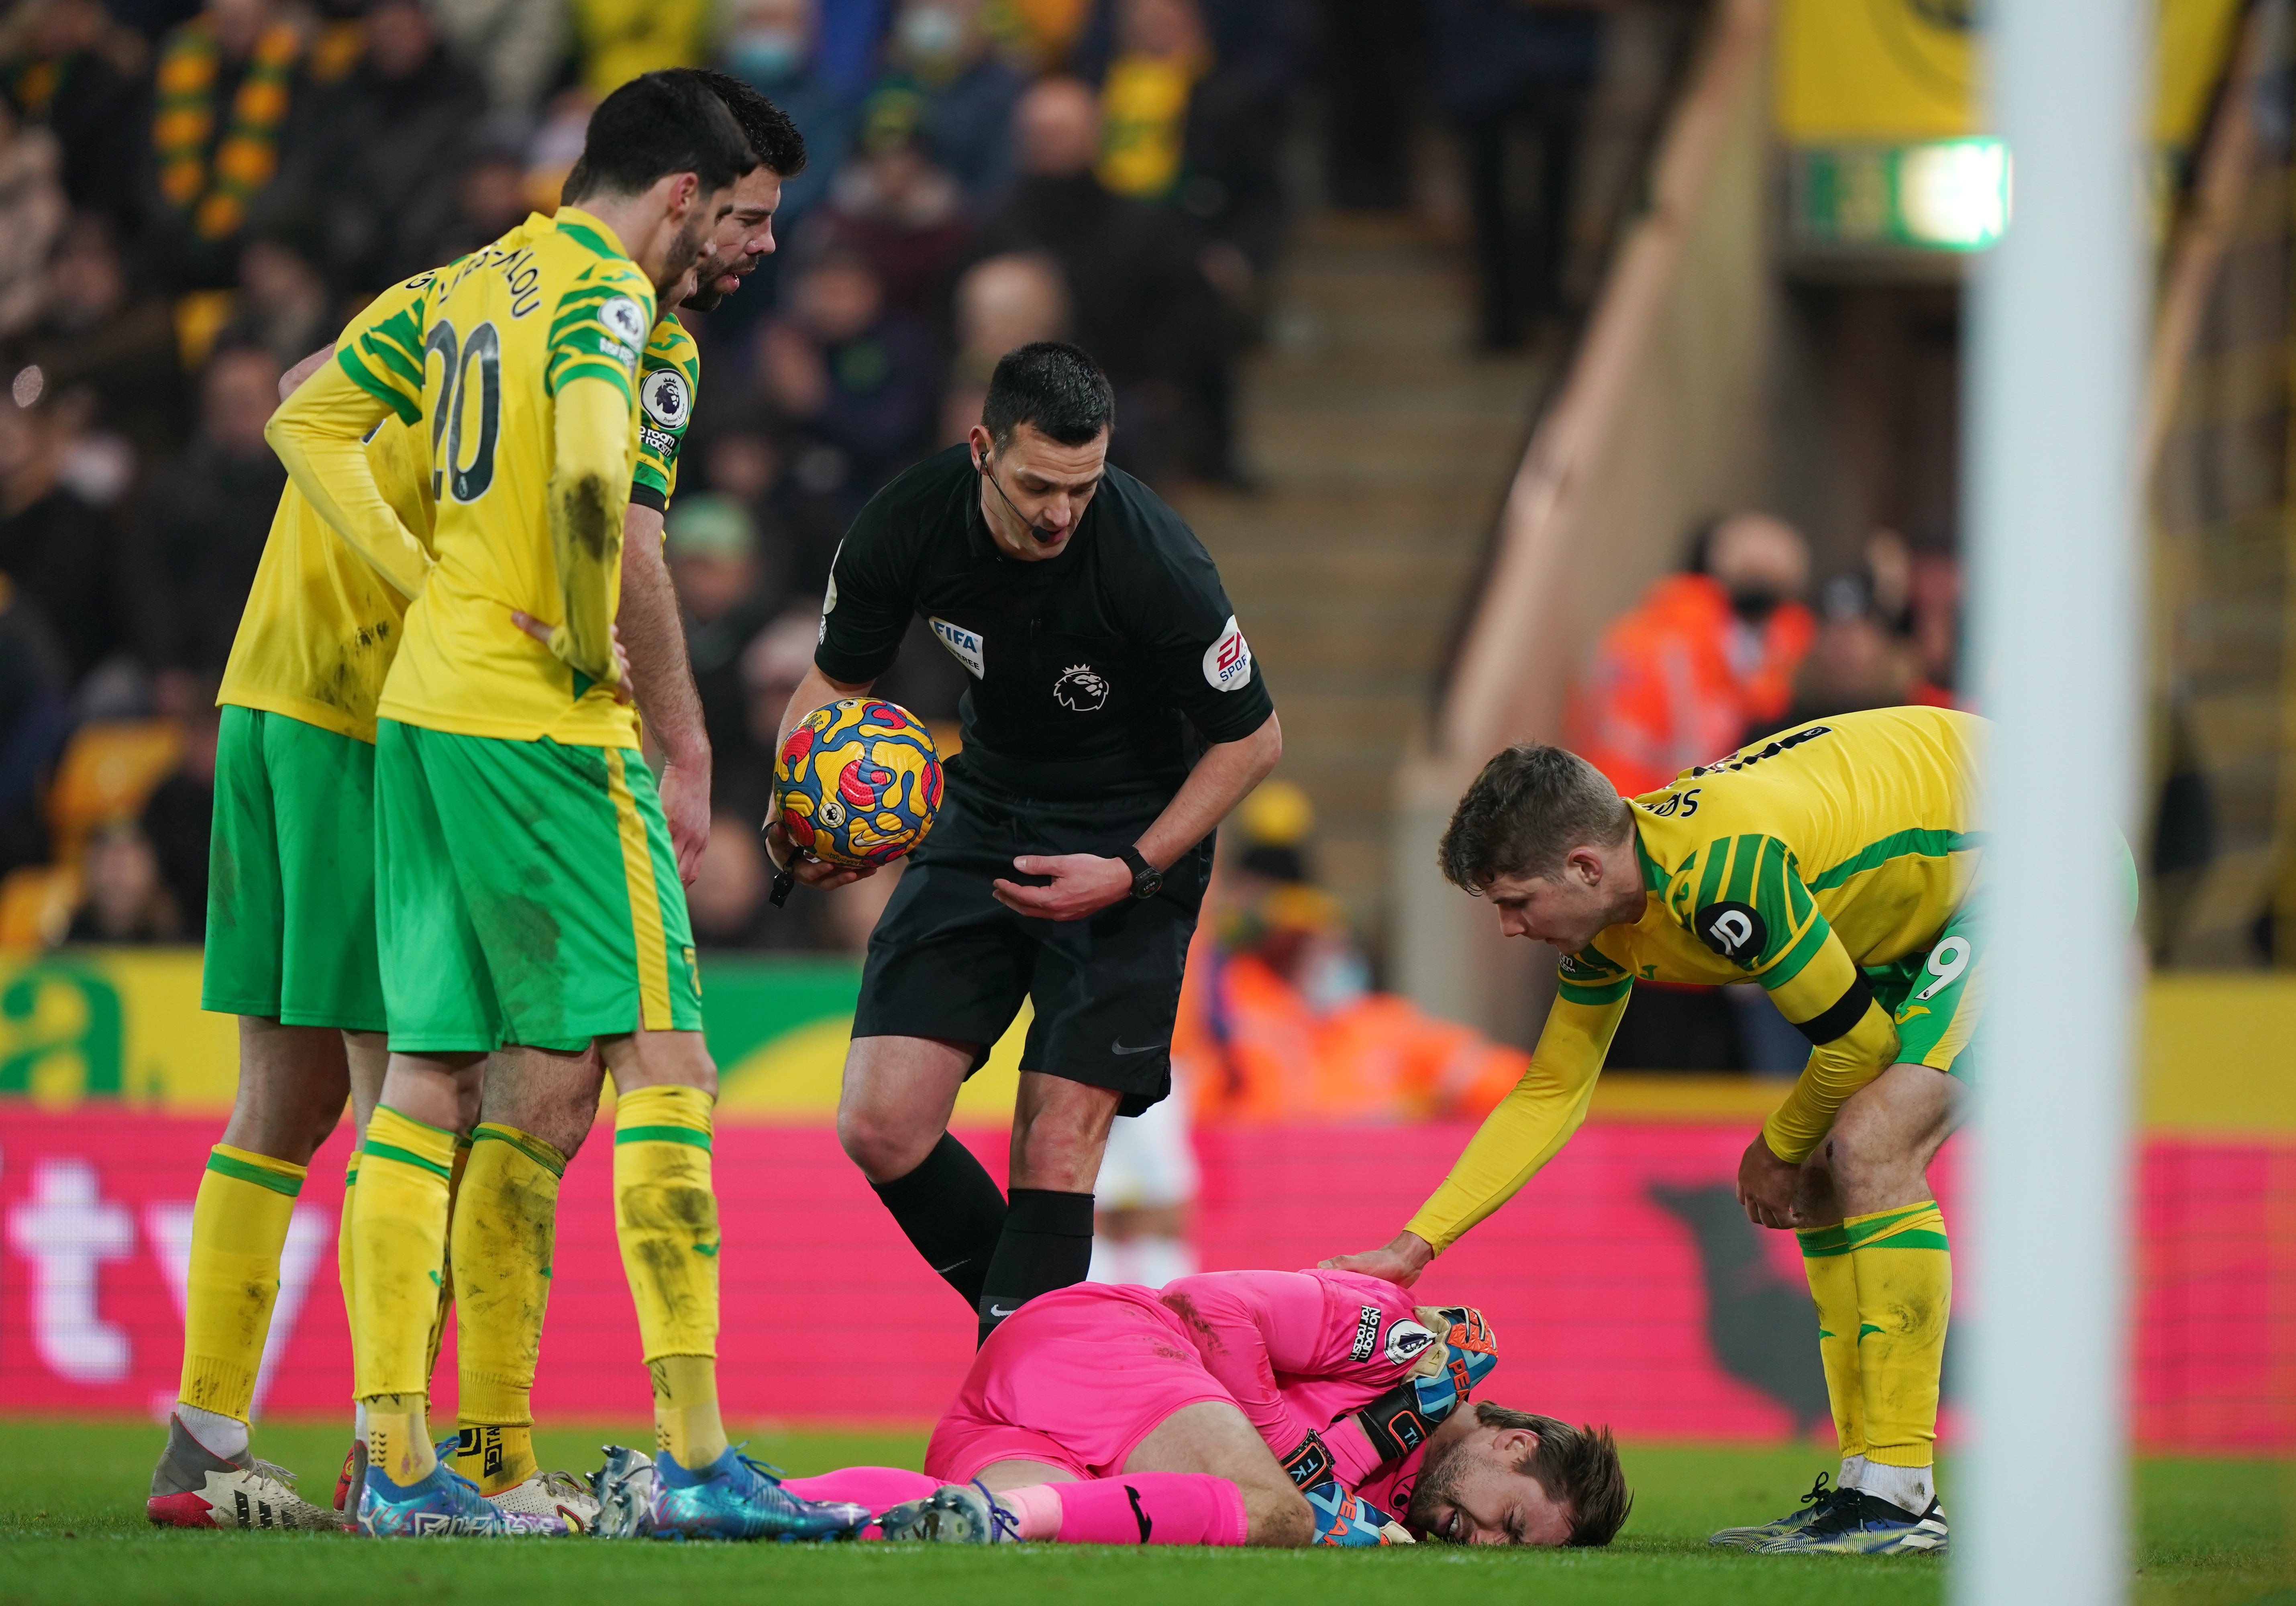 Norwich goalkeeper Tim Krul was injured against Everton (Joe Giddens/PA)